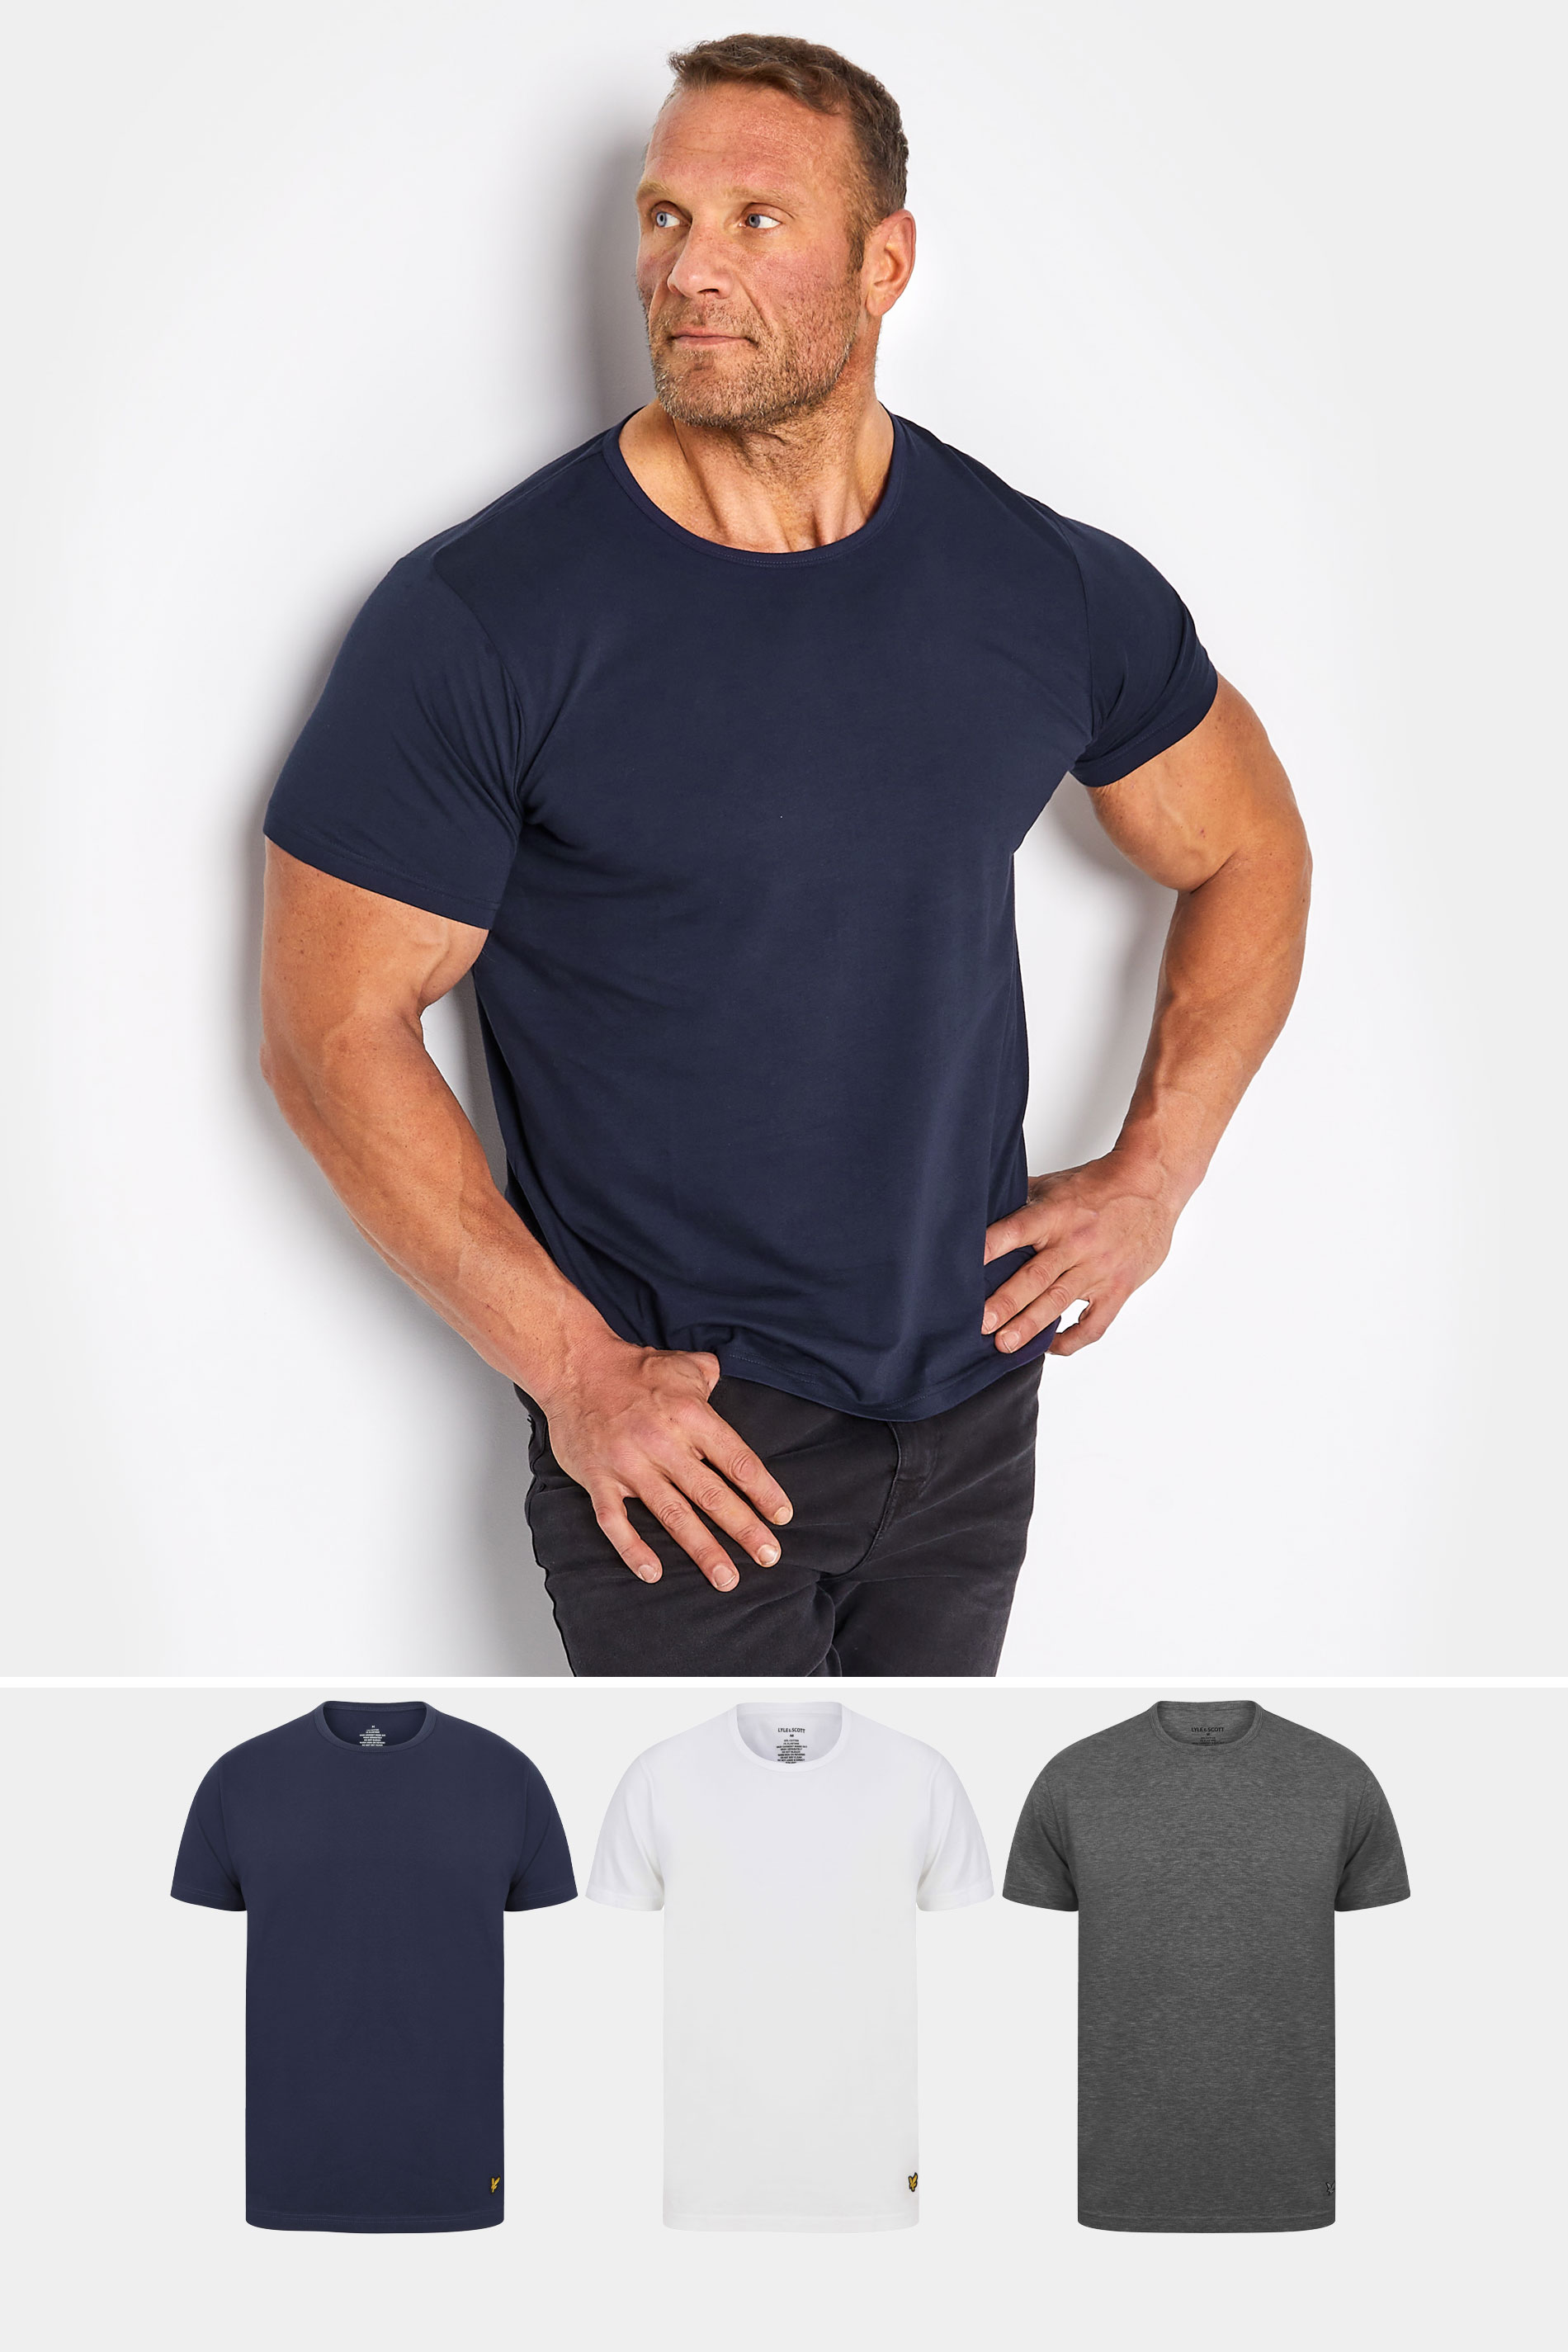 LYLE & SCOTT Big & Tall 3 Pack Navy & Grey Lounge T-Shirts 1